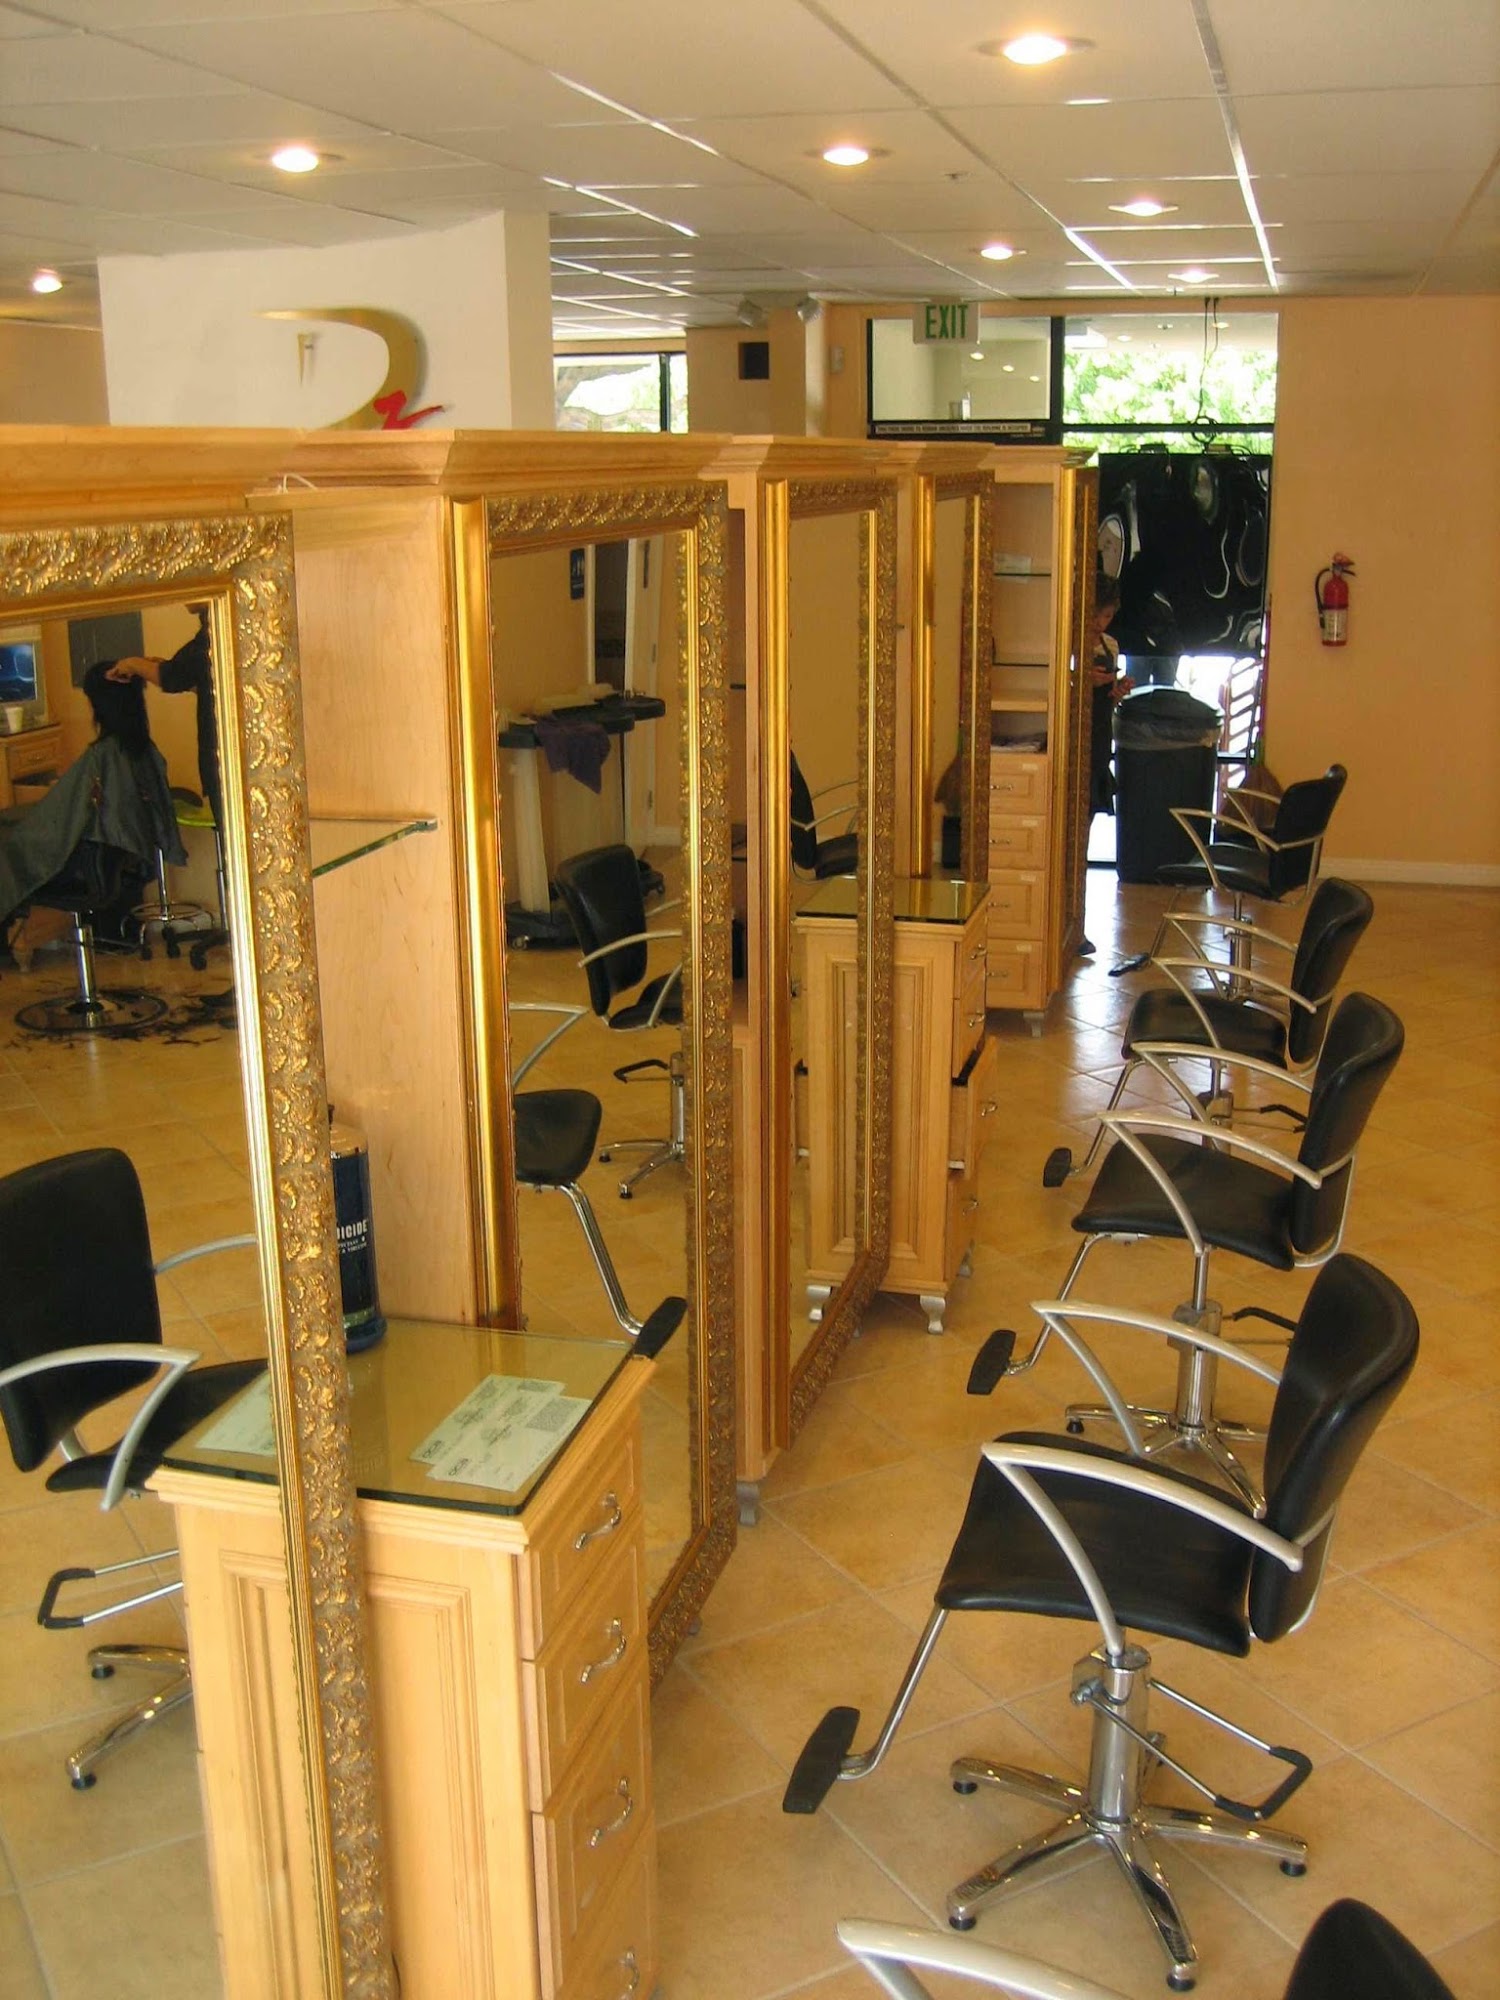 D2 Hair Salon